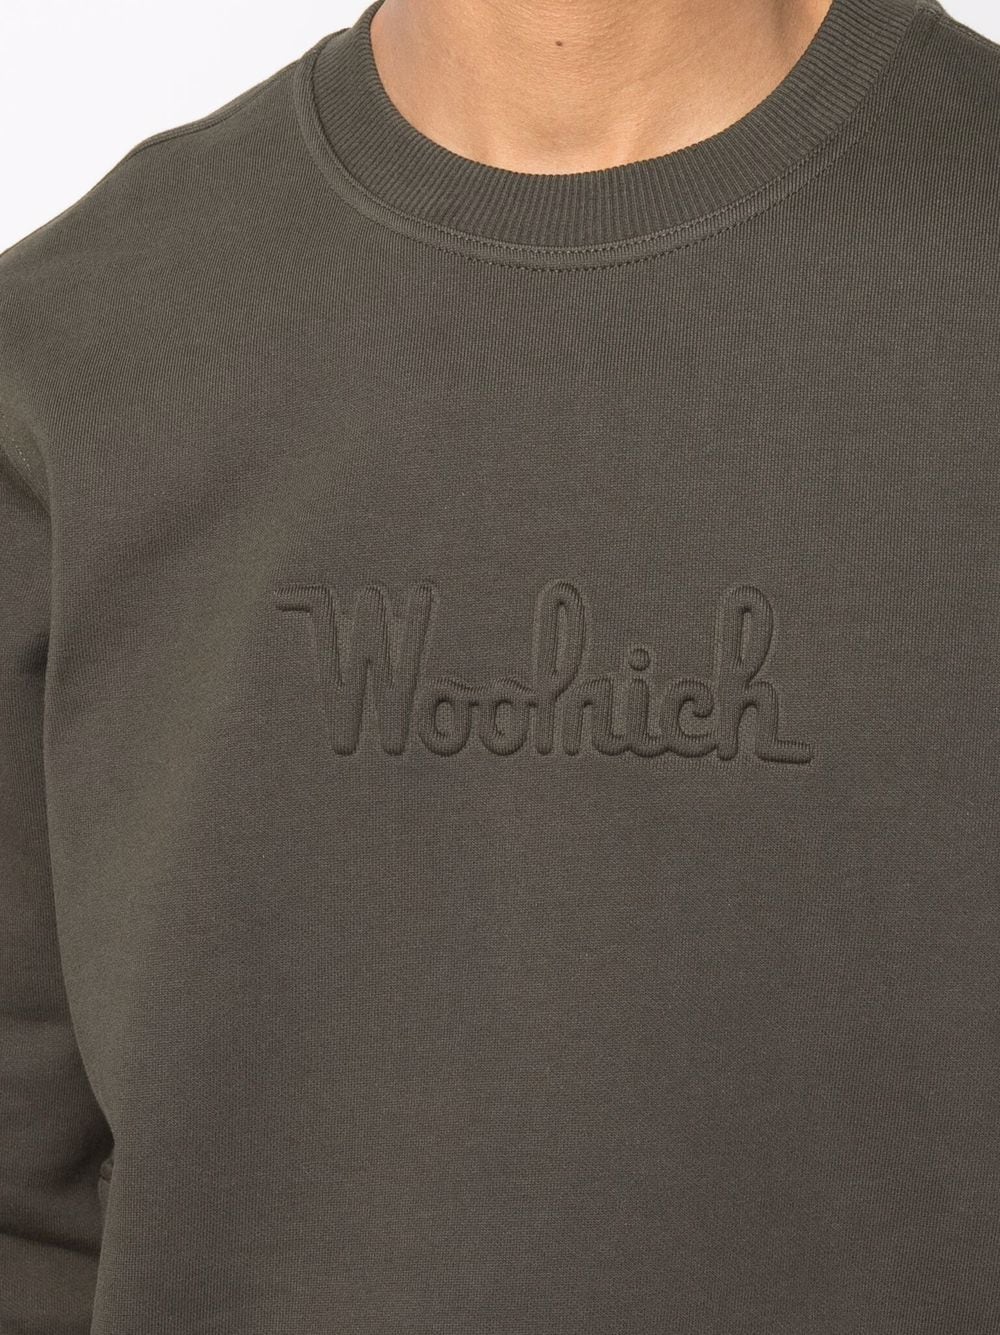 фото Woolrich толстовка с тисненым логотипом